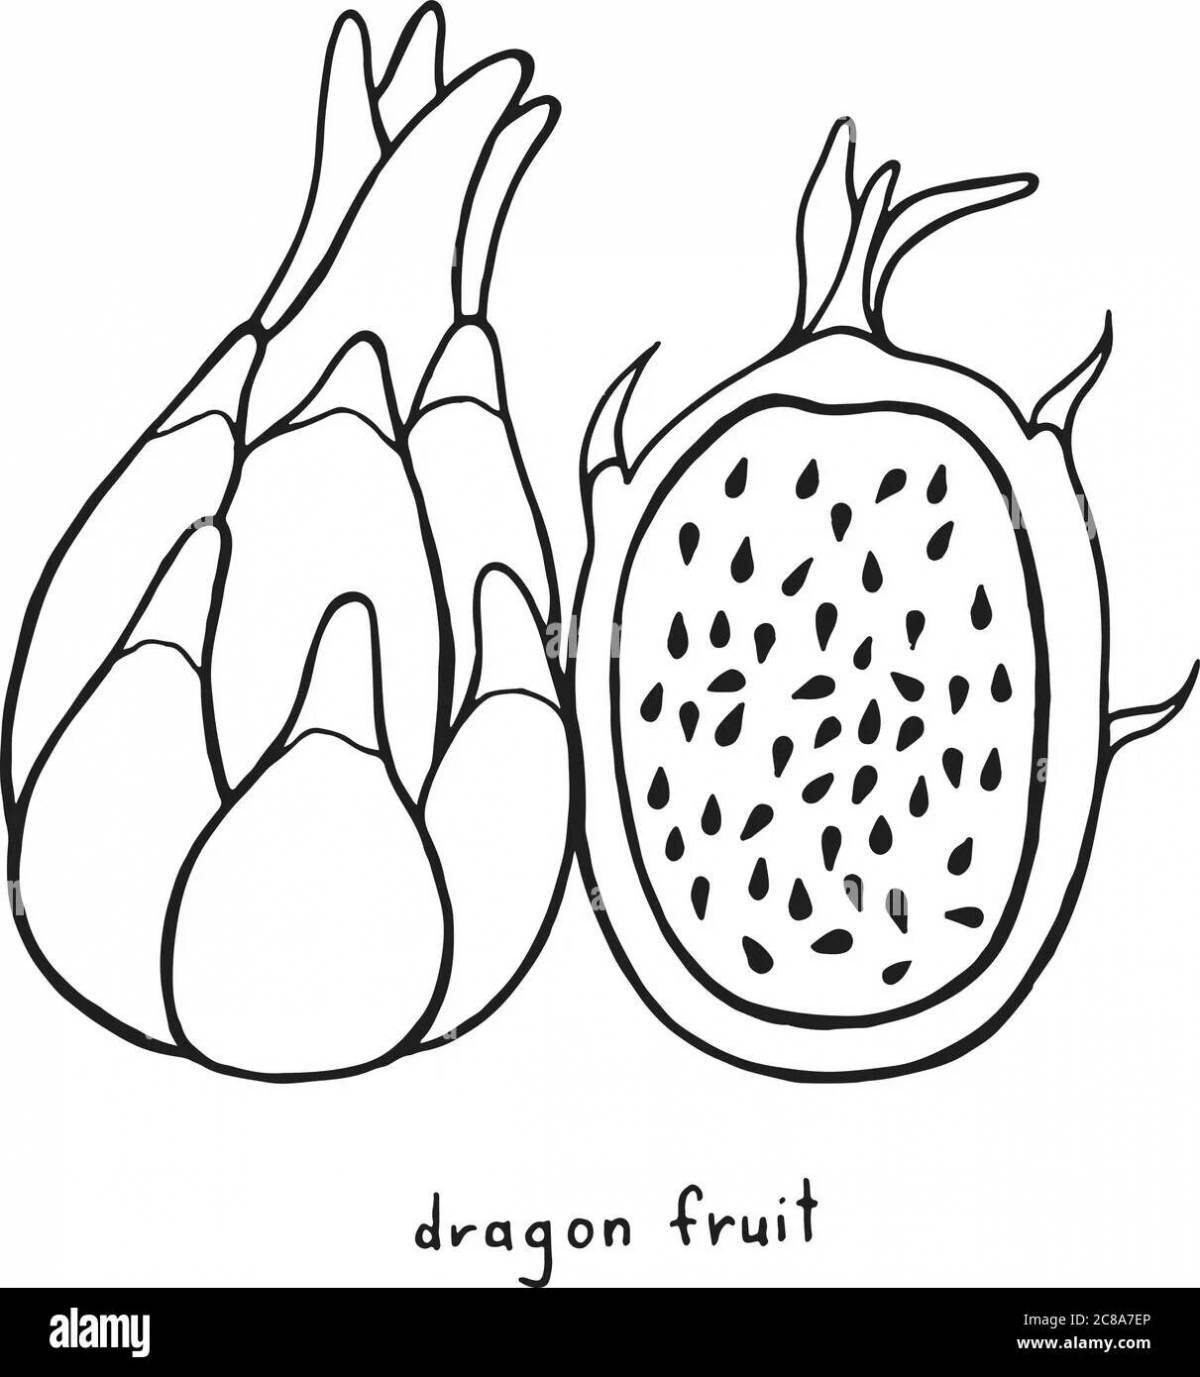 Wonderful dragon fruit coloring page